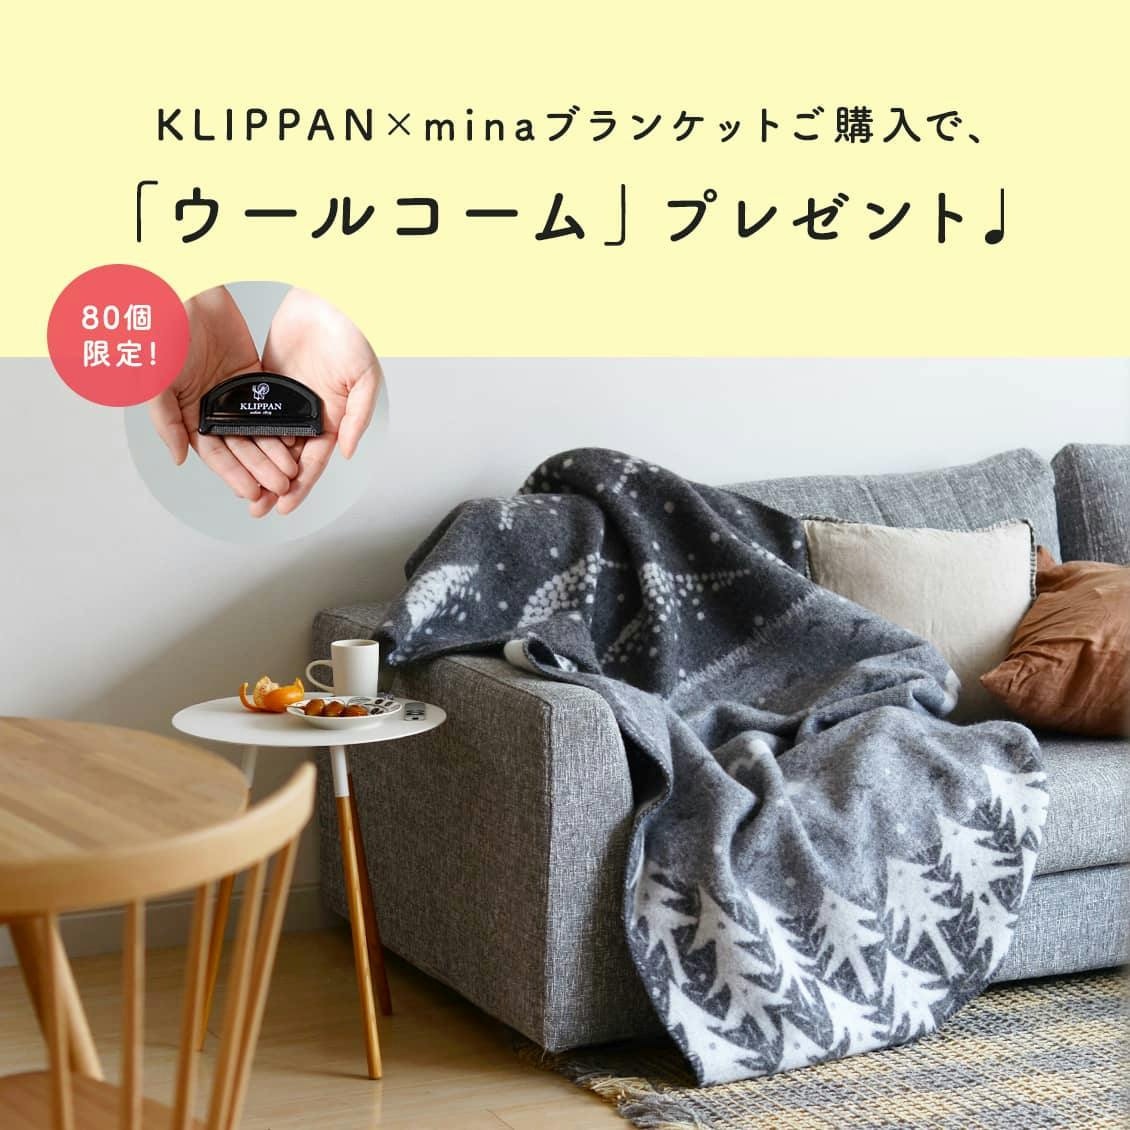 KLIPPAN×ミナペルホネン ブランケット コーム付-